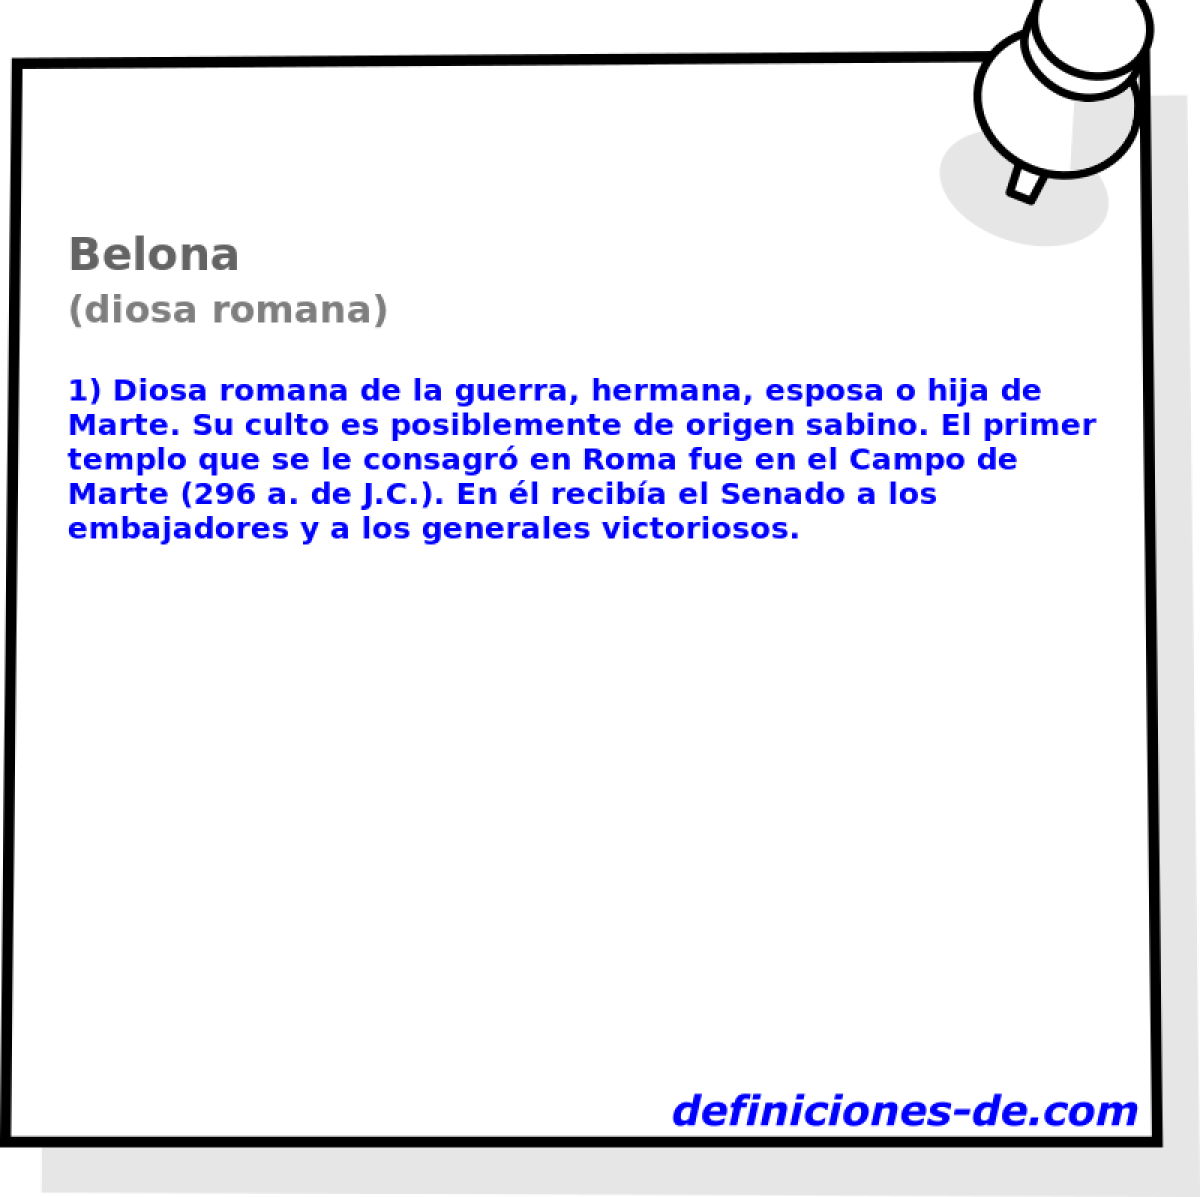 Belona (diosa romana)